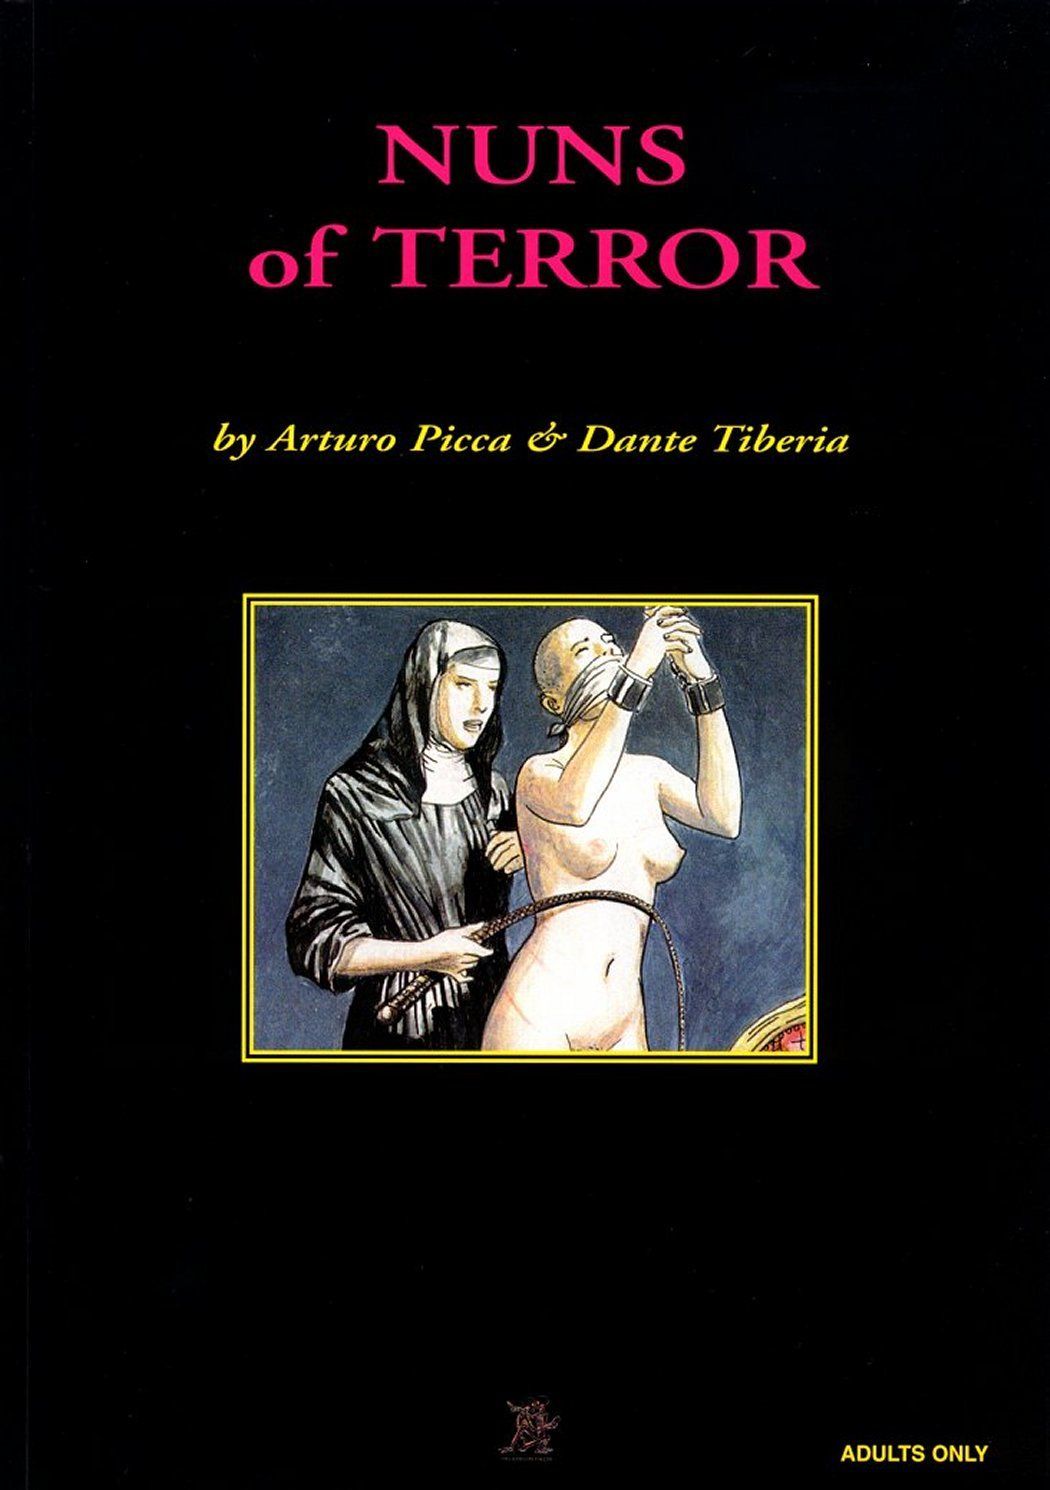 arturo picca Dante tiberia' rahibeler bu terör